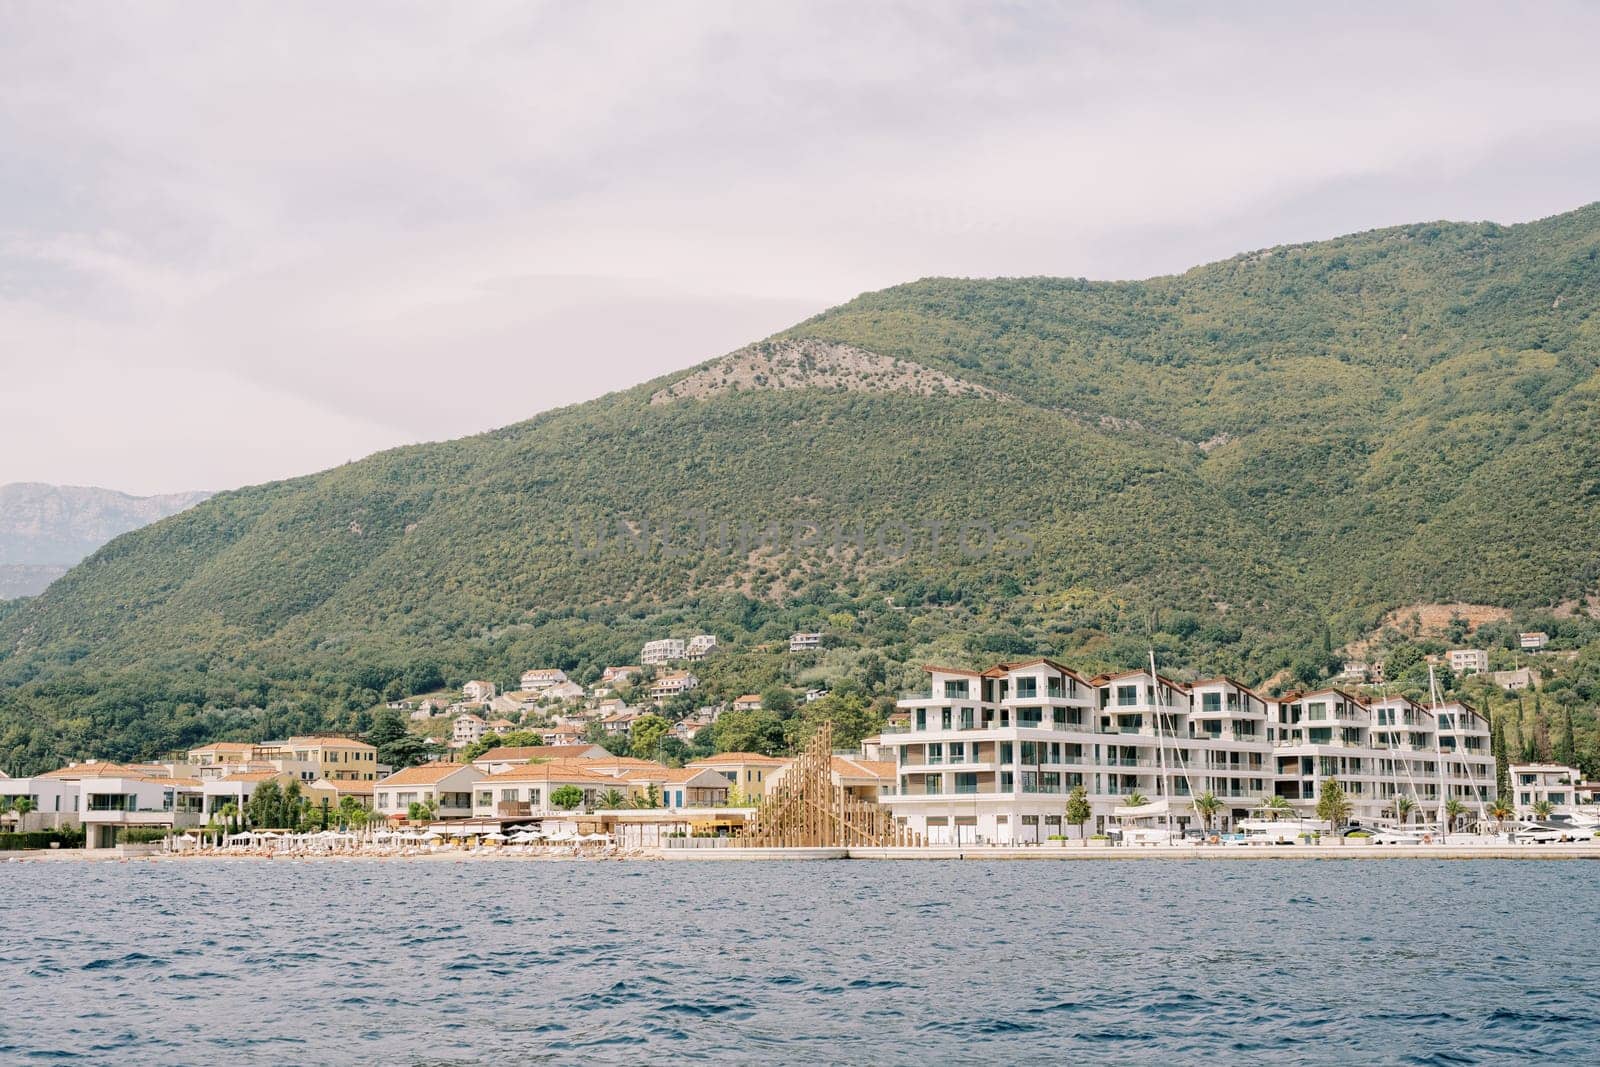 Multi-storey villas of the private hotel complex One and Only on the seashore. Portonovi, Montenegro. High quality photo